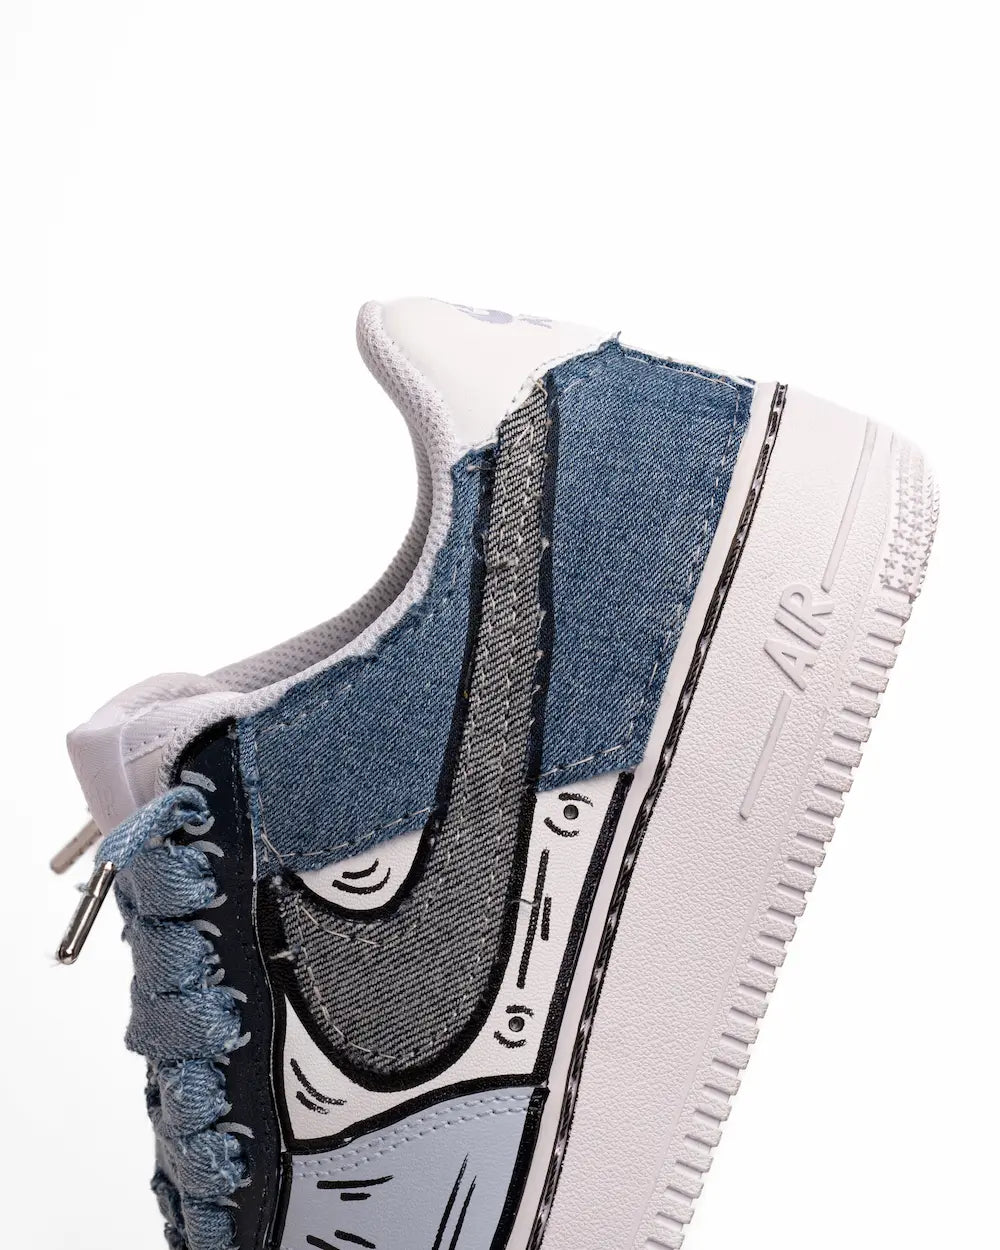 Nike air force 1 custom con effetto comics rivestita in jeans